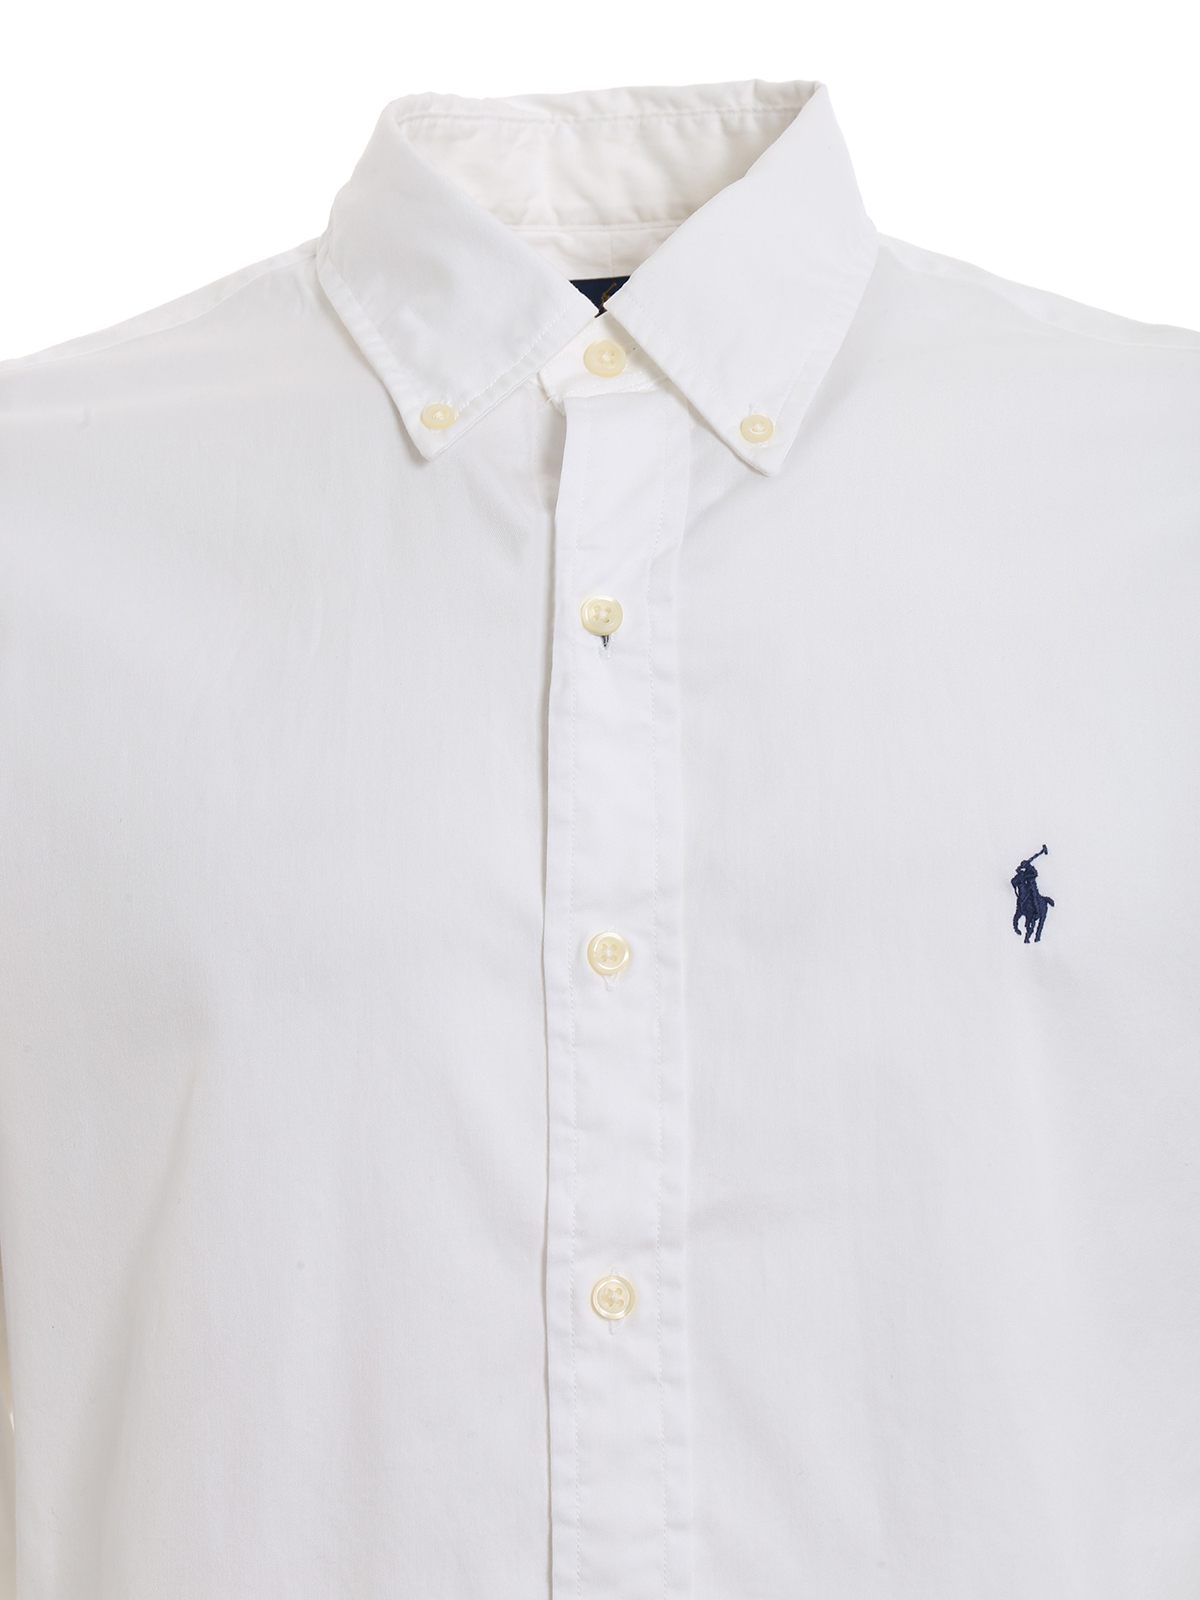 Shirts Polo Ralph Lauren - White cotton twill shirt - 710741788010